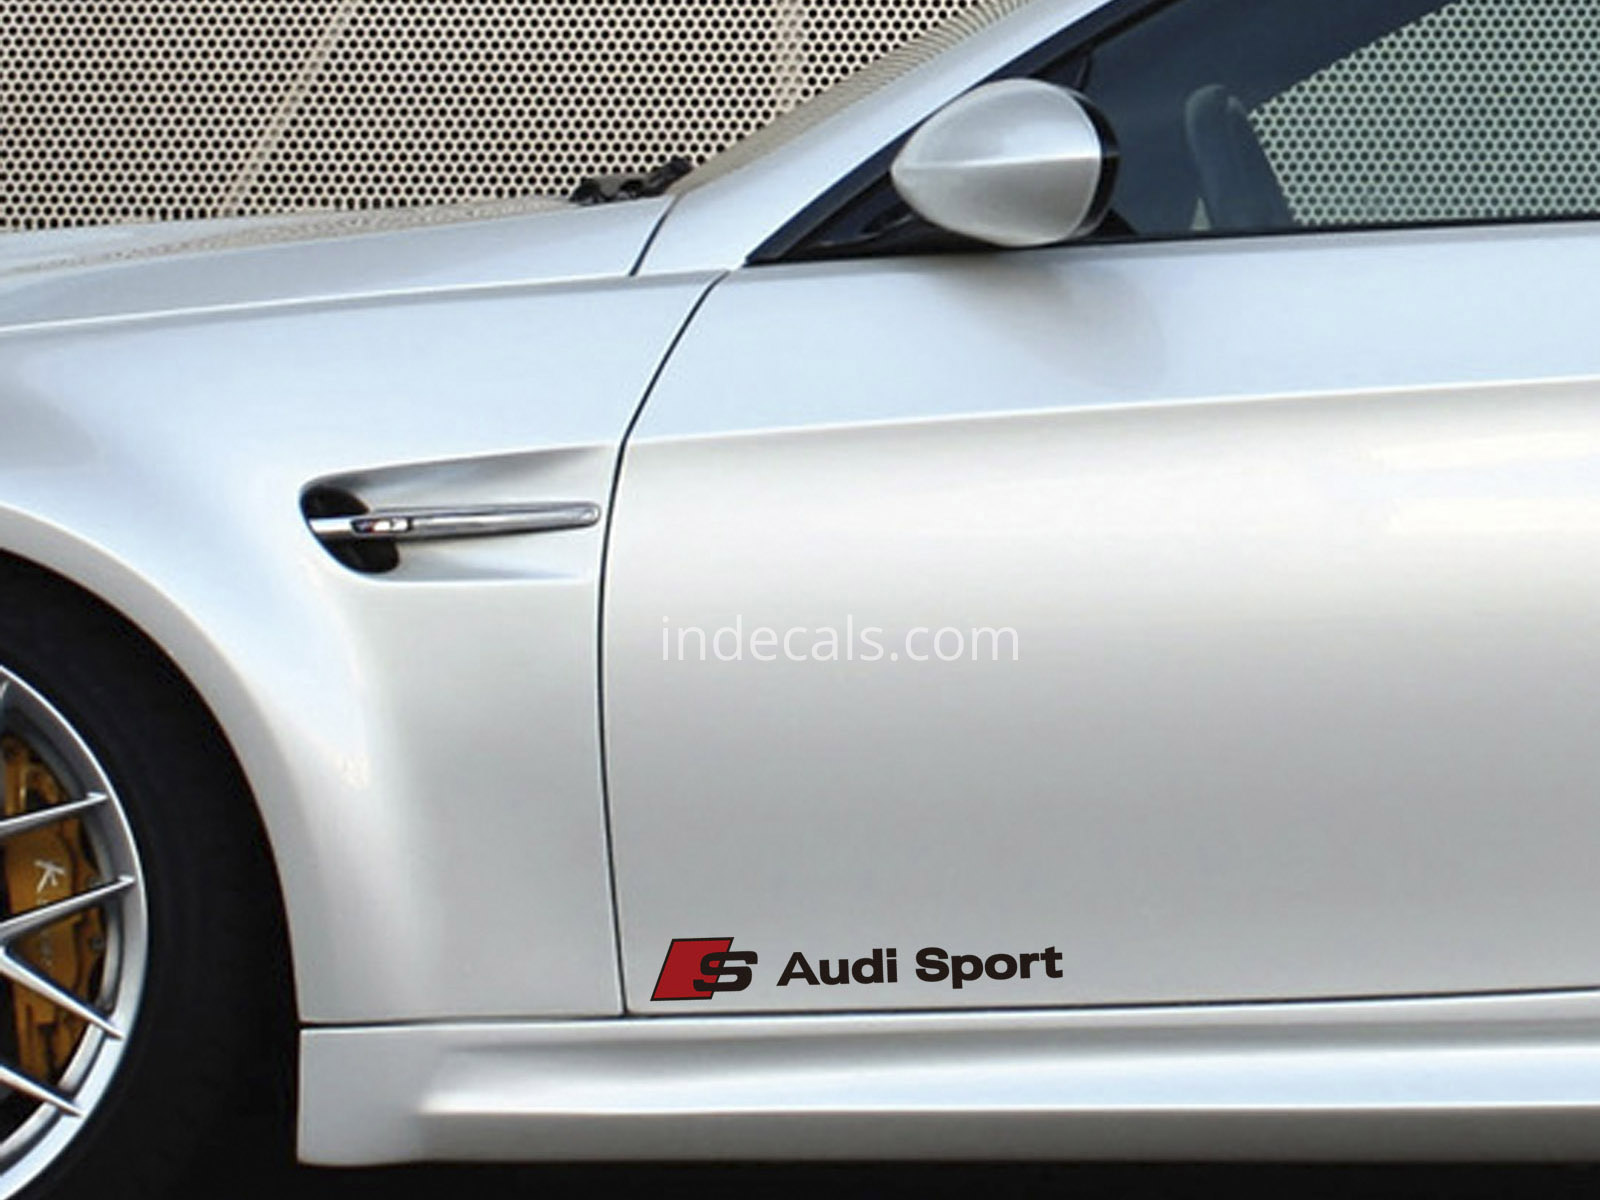 2 x Audi S-line Audi Sport Stickers Medium - Black + Red